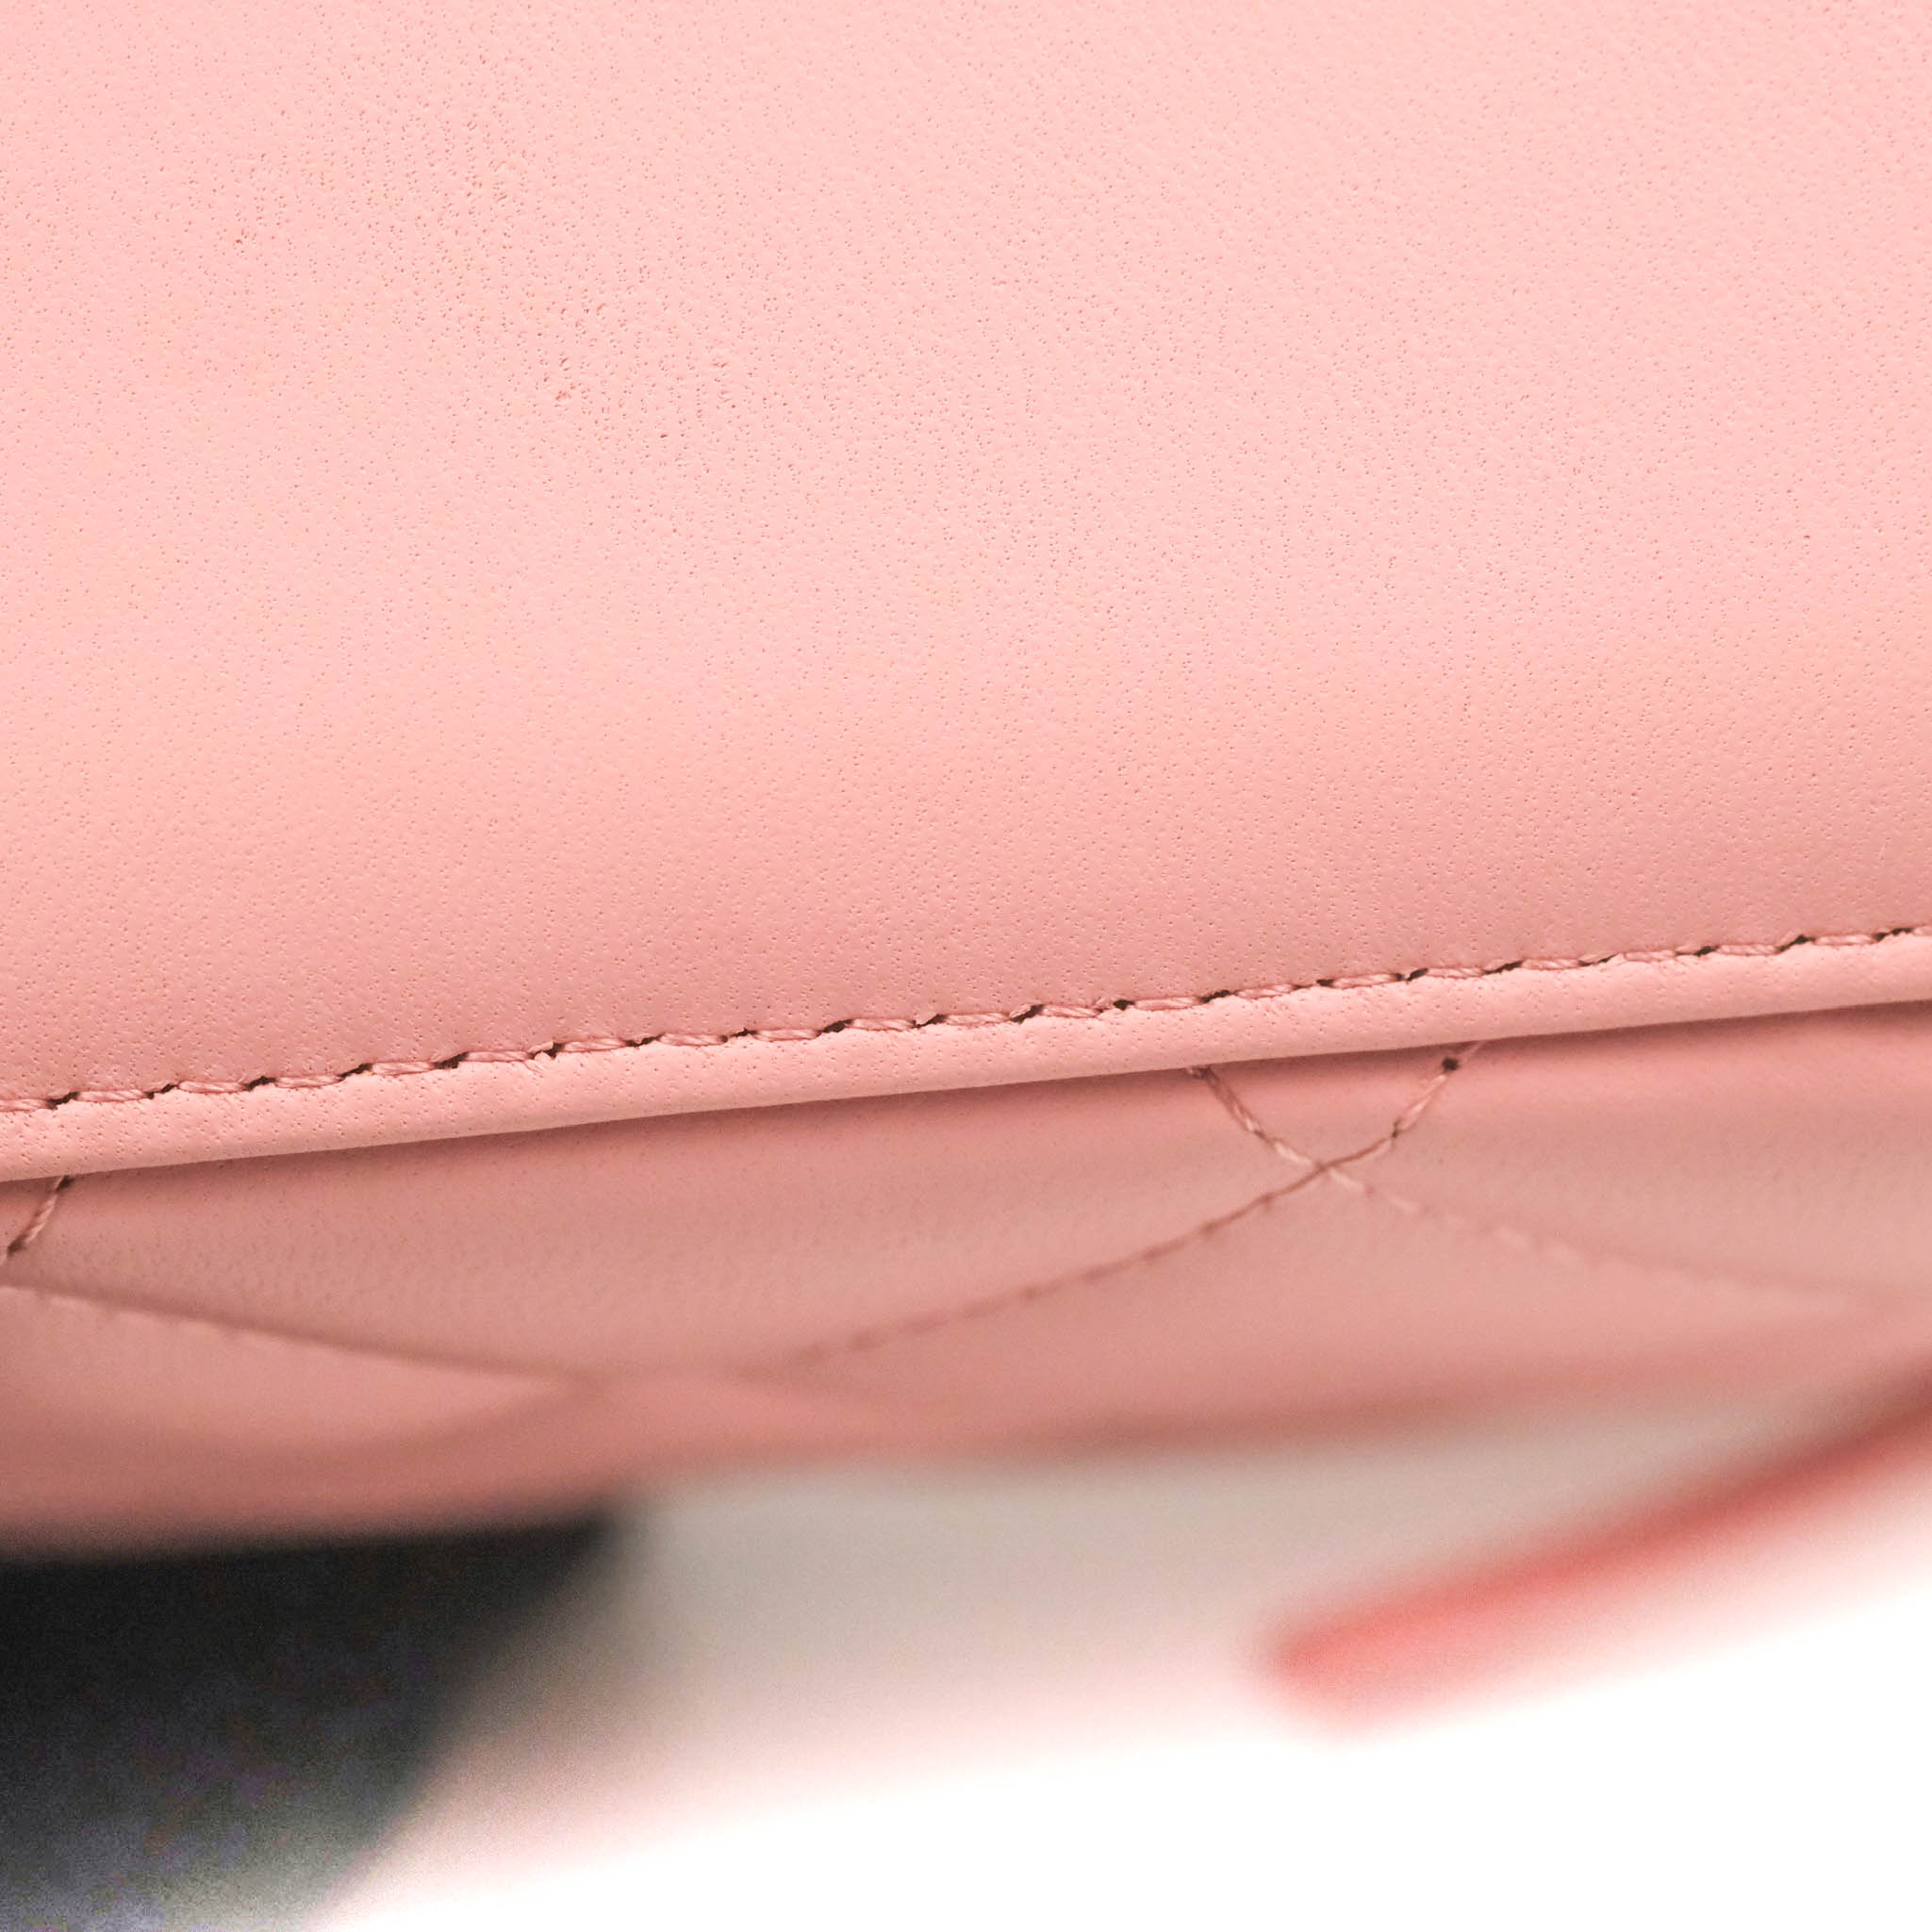 Pink Lambskin 'CC' Elegant Chain Vanity Case